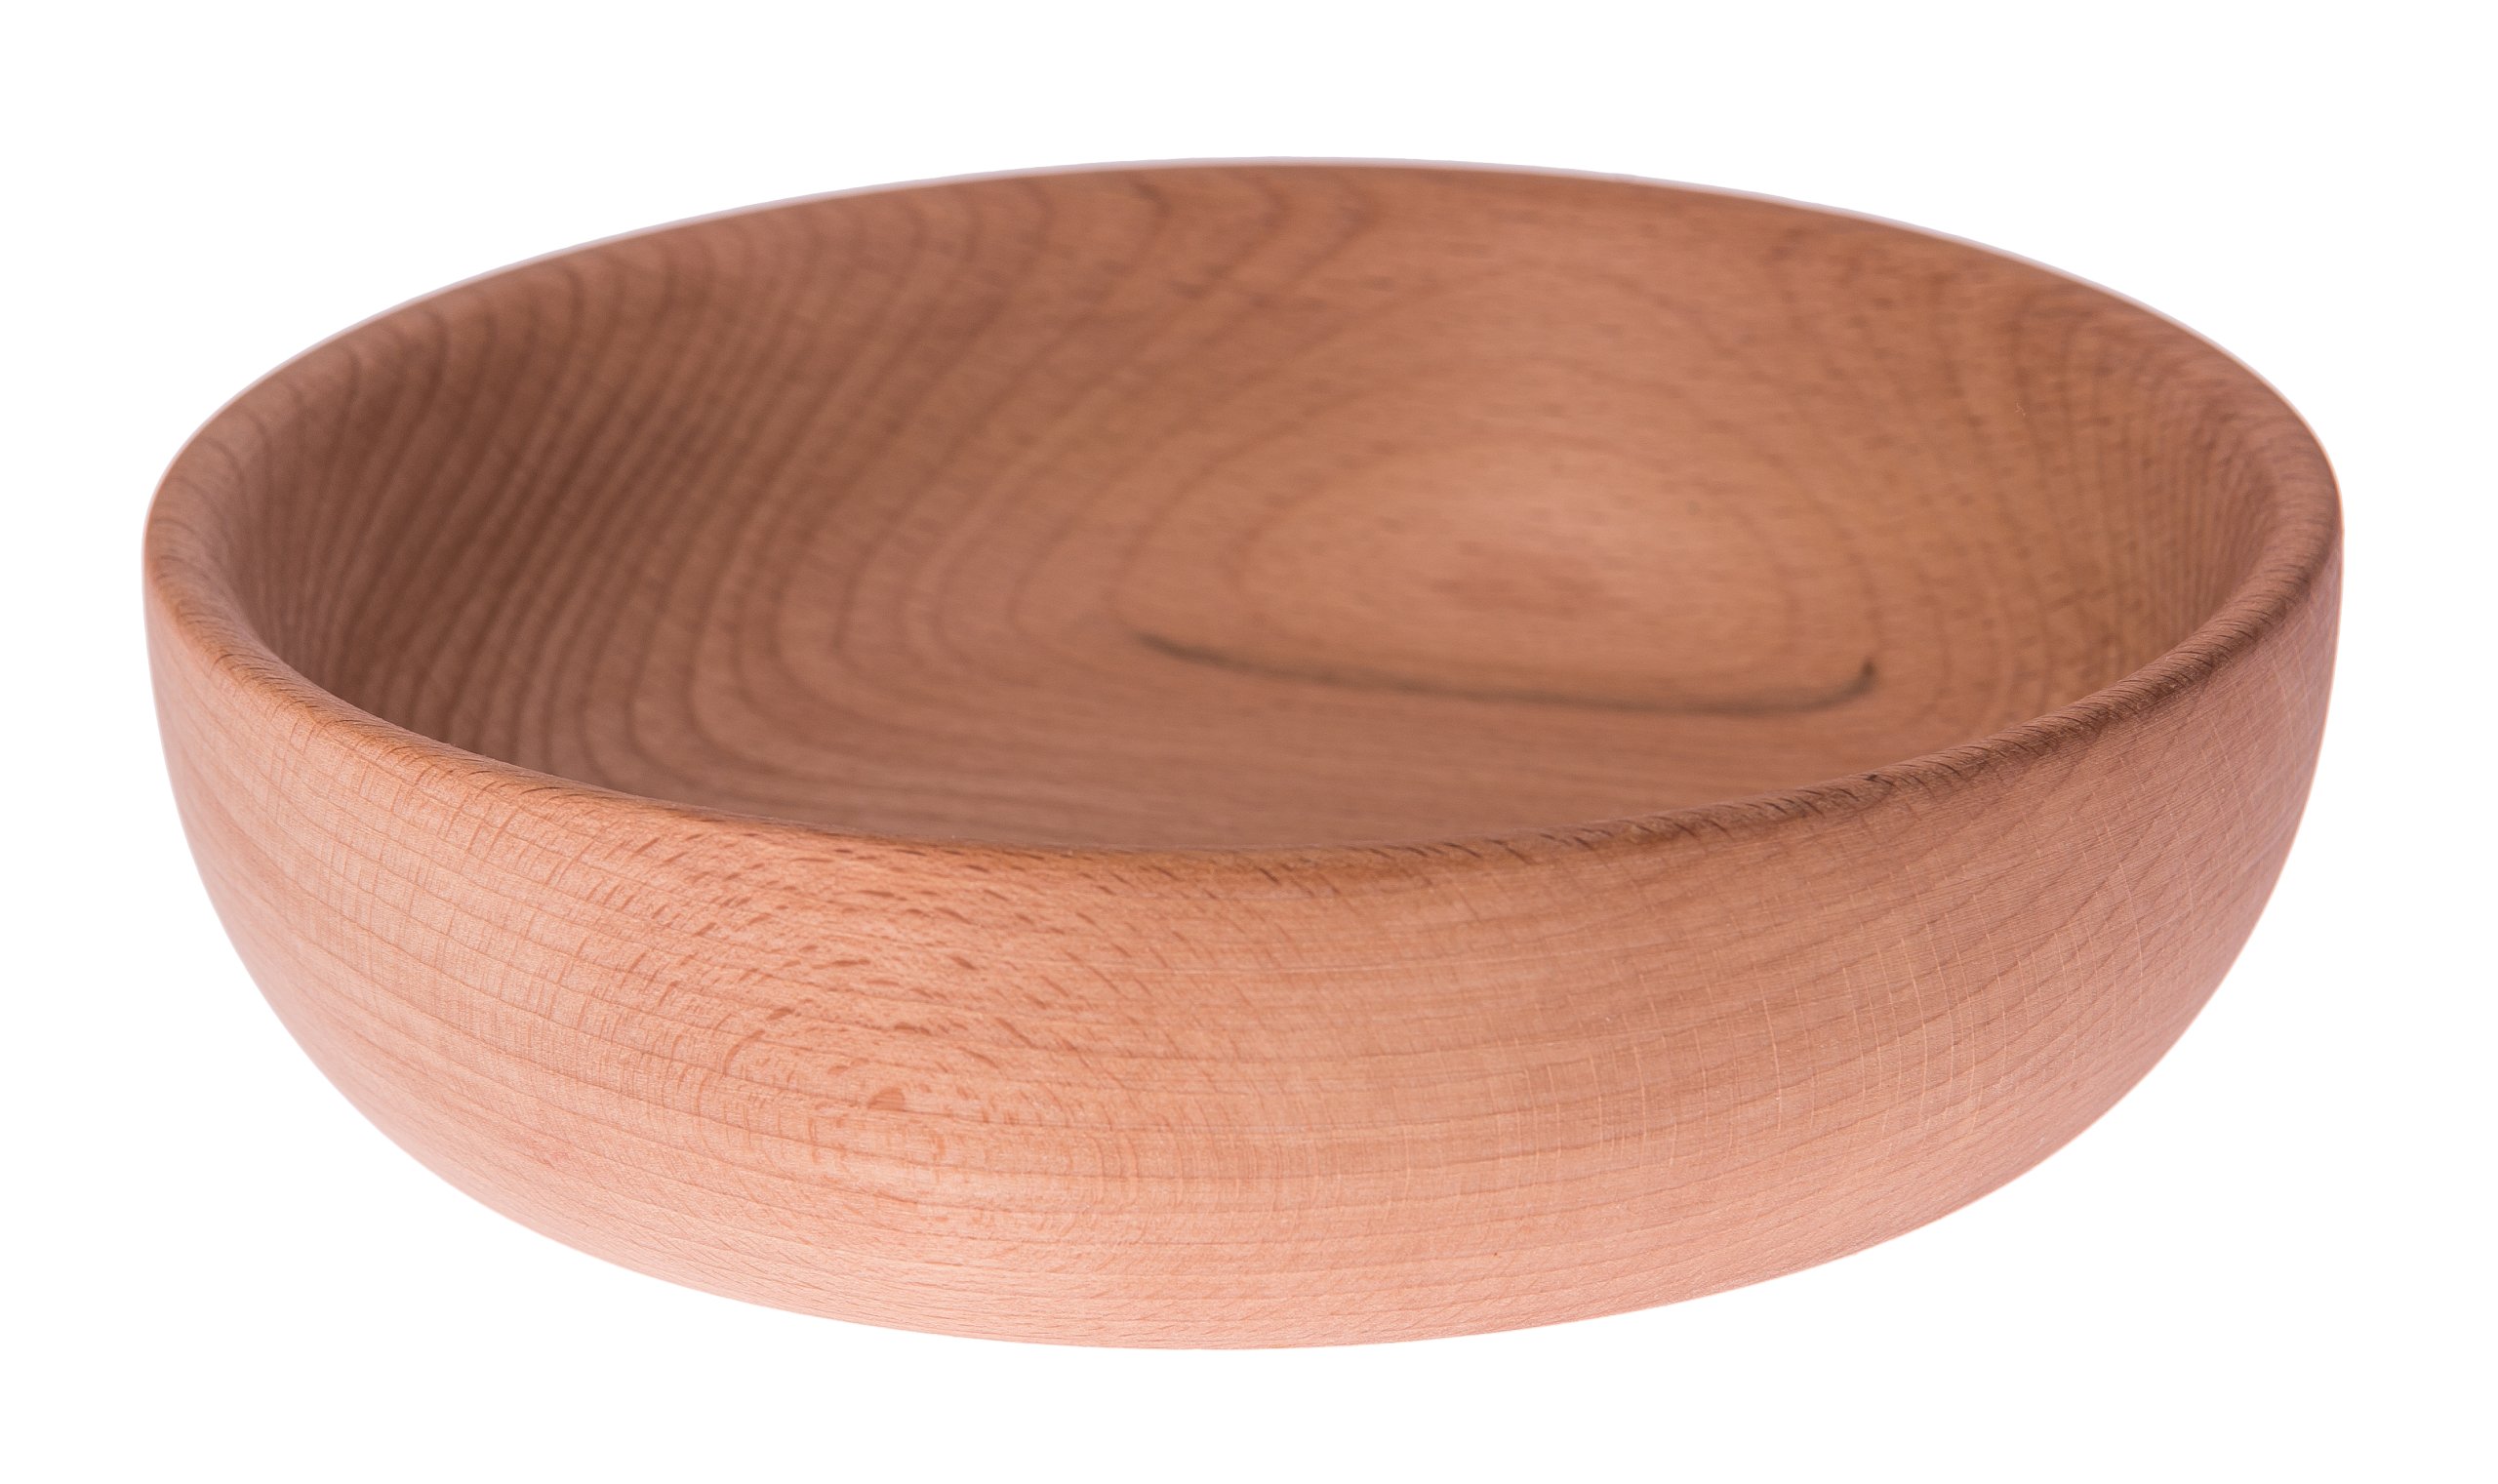 Деревянная миска 9. Деревянная чаша. Миска деревянная. Деревянная тарелка глубокая. Деревянная миска глубокая.